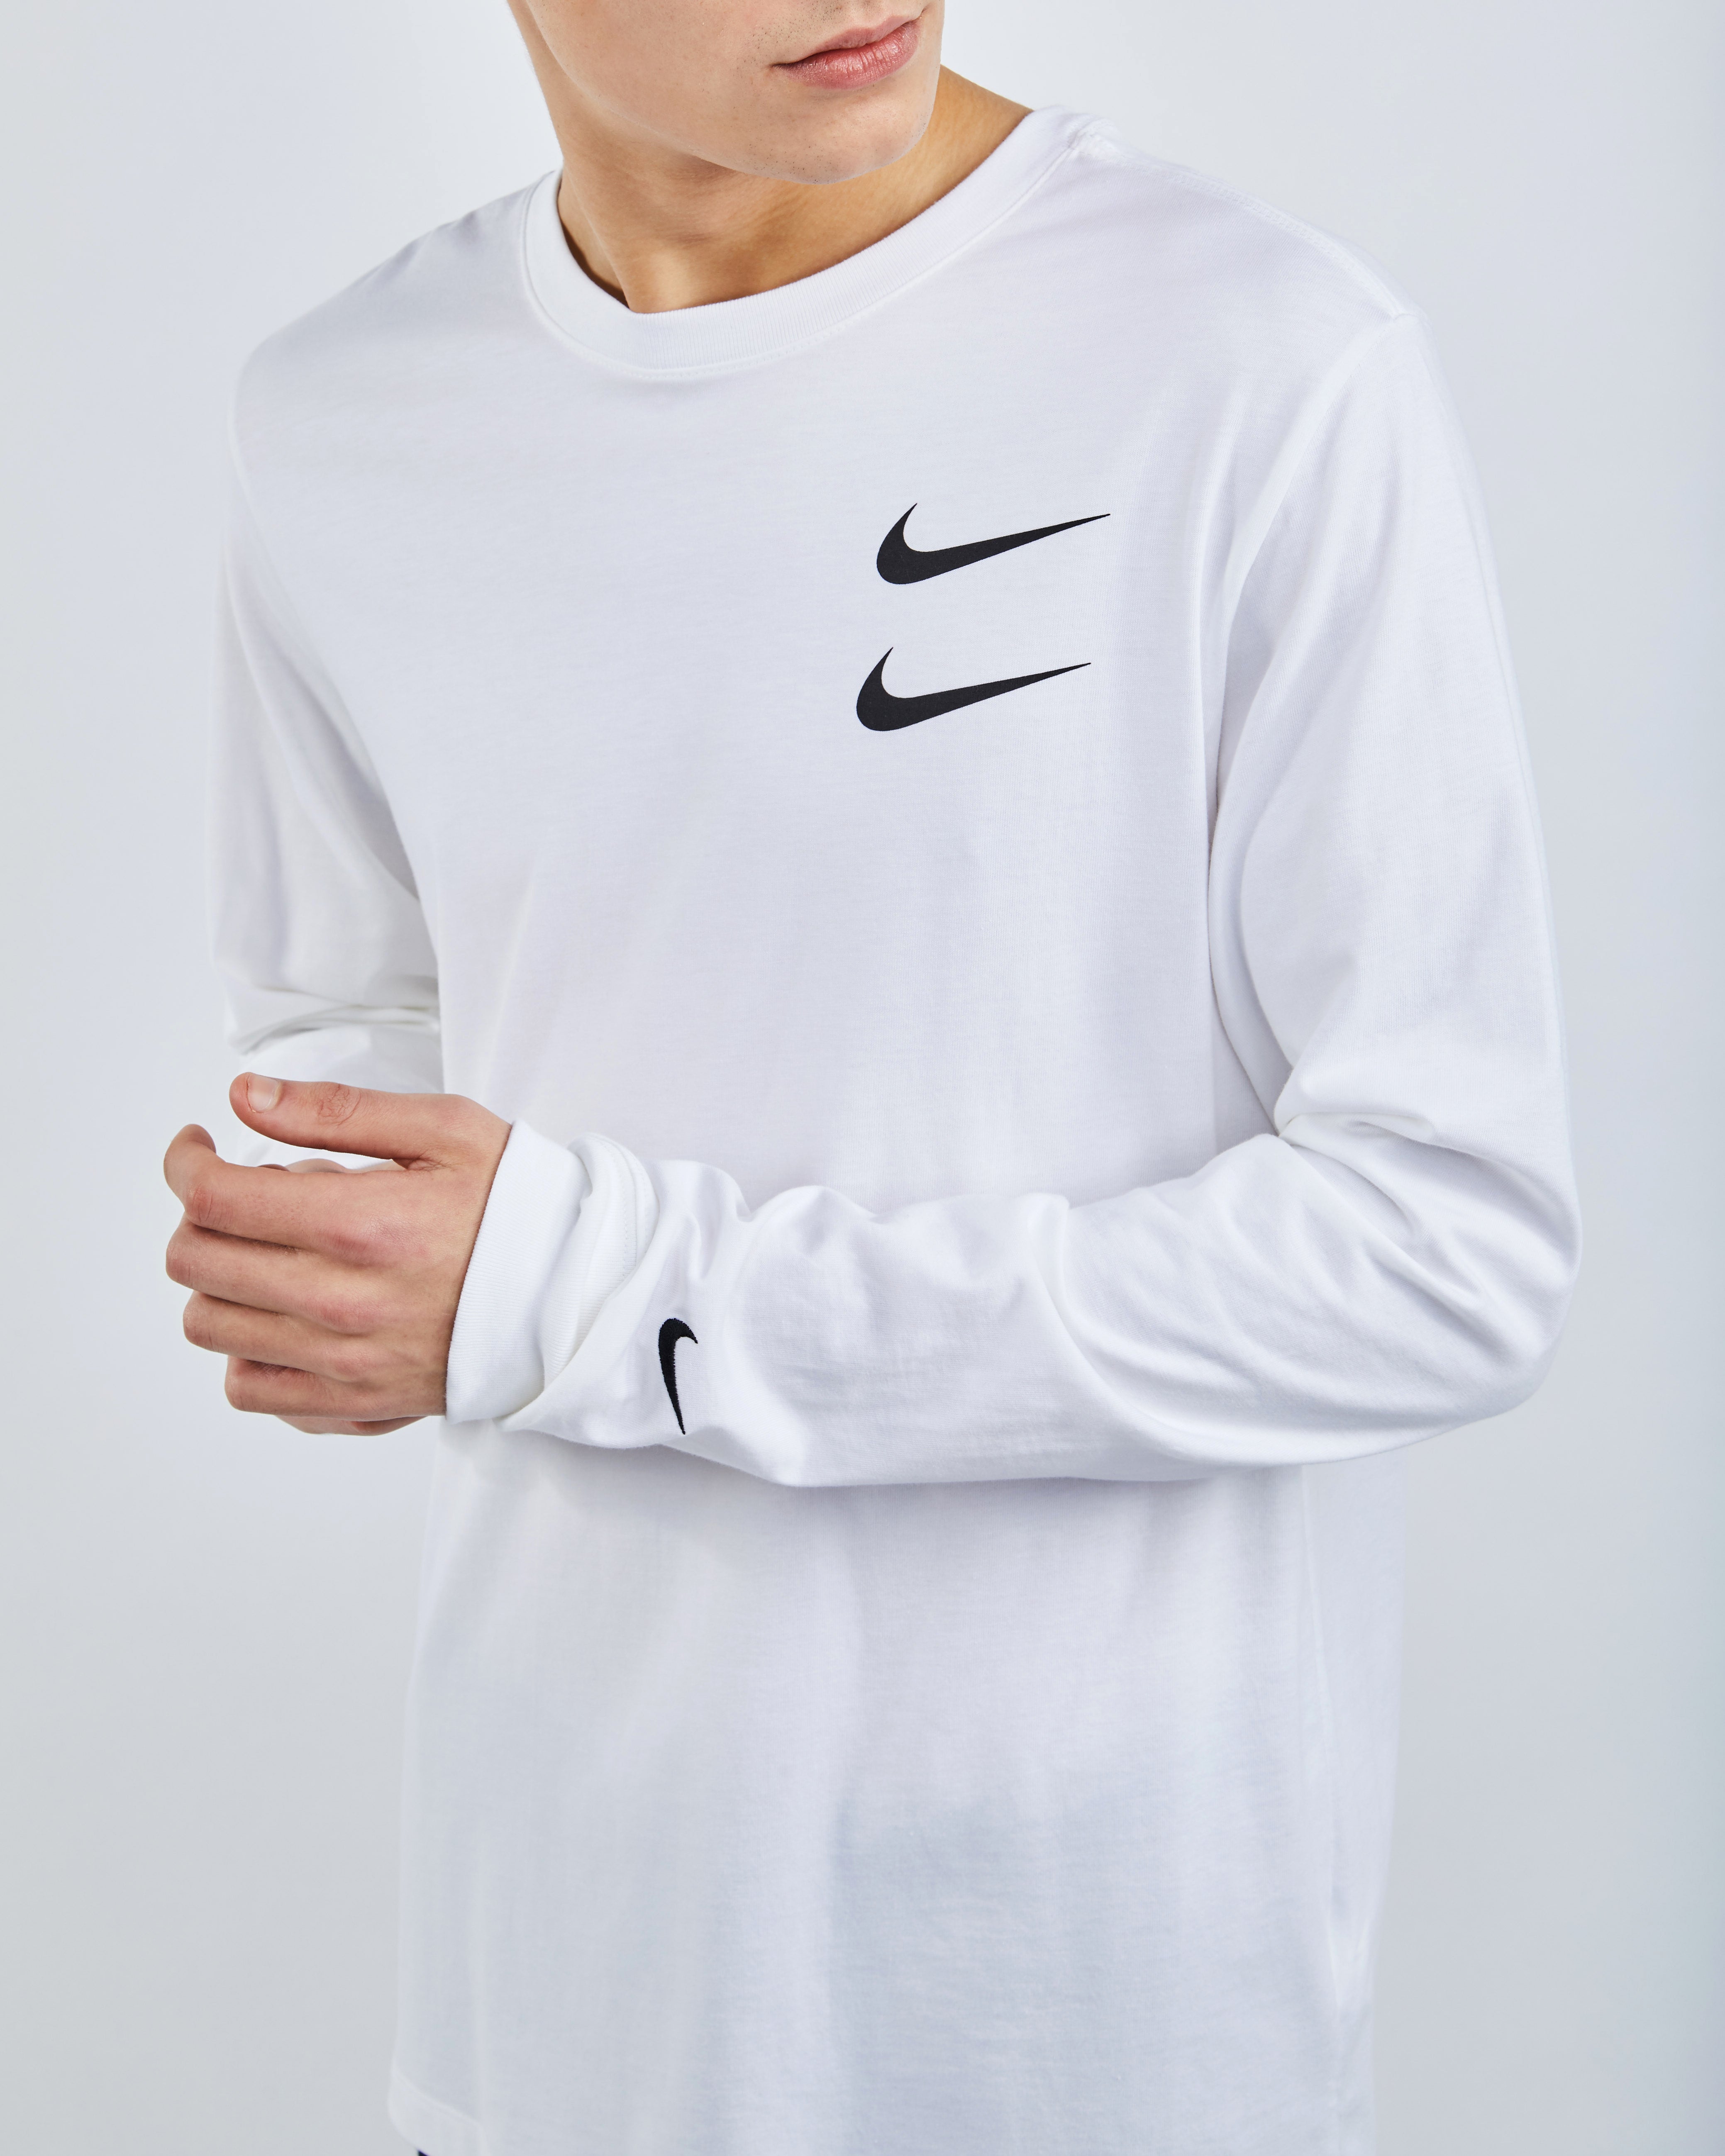 Nike Swoosh Long-sleeve @ Footlocker